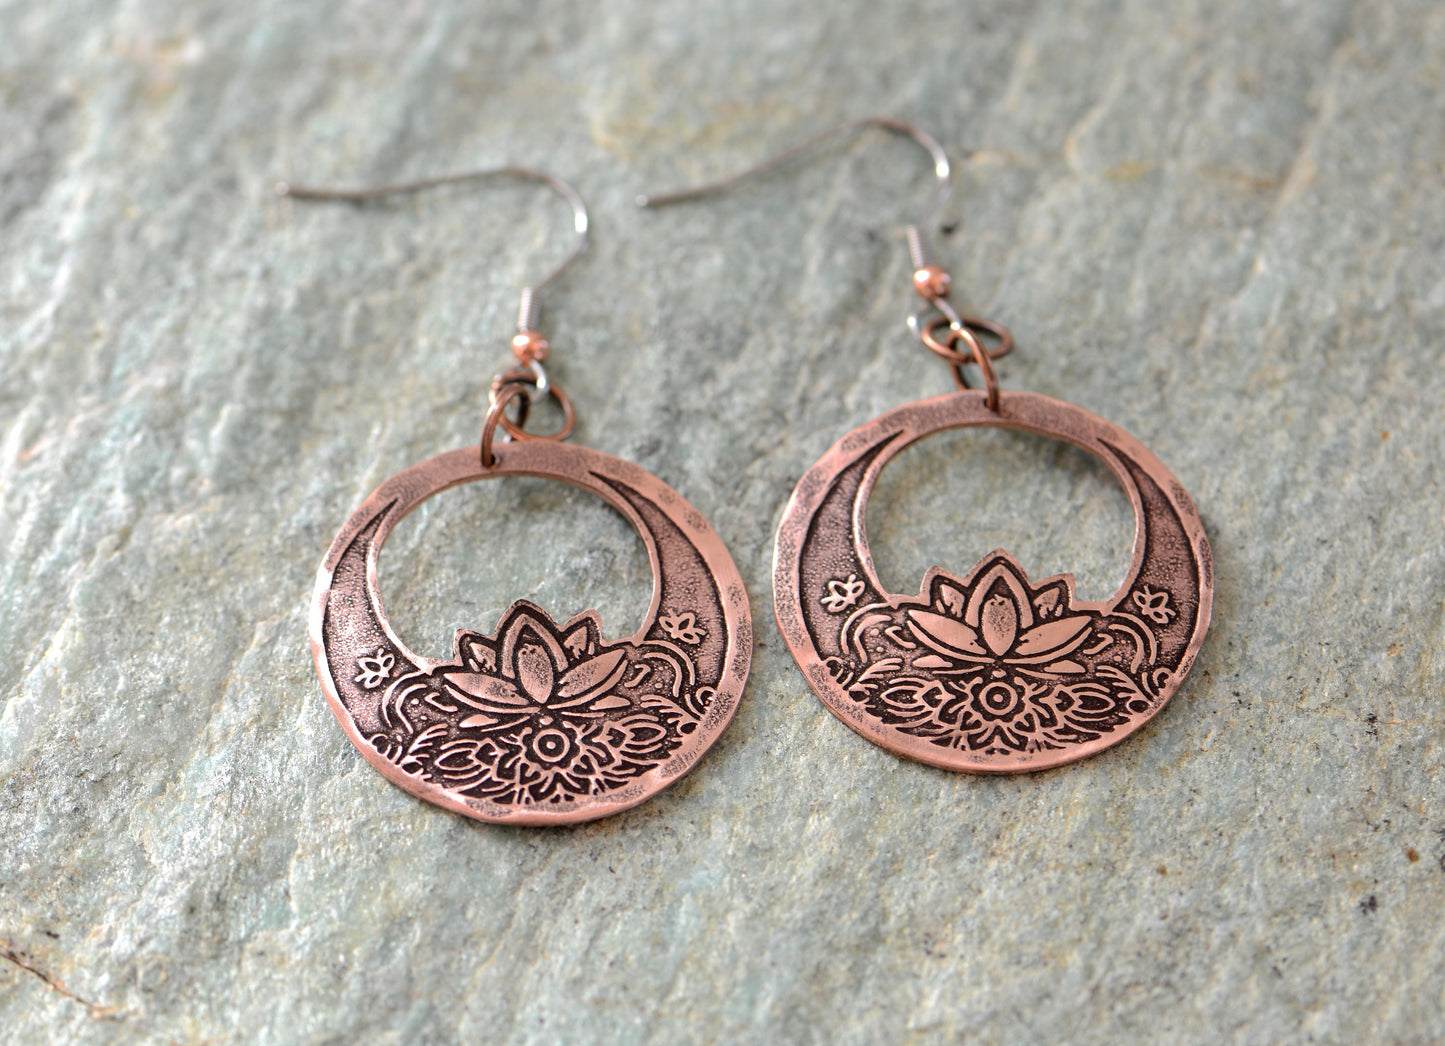 copper lotus earrings - dangle earrings - yoga inspired earrings - boho style